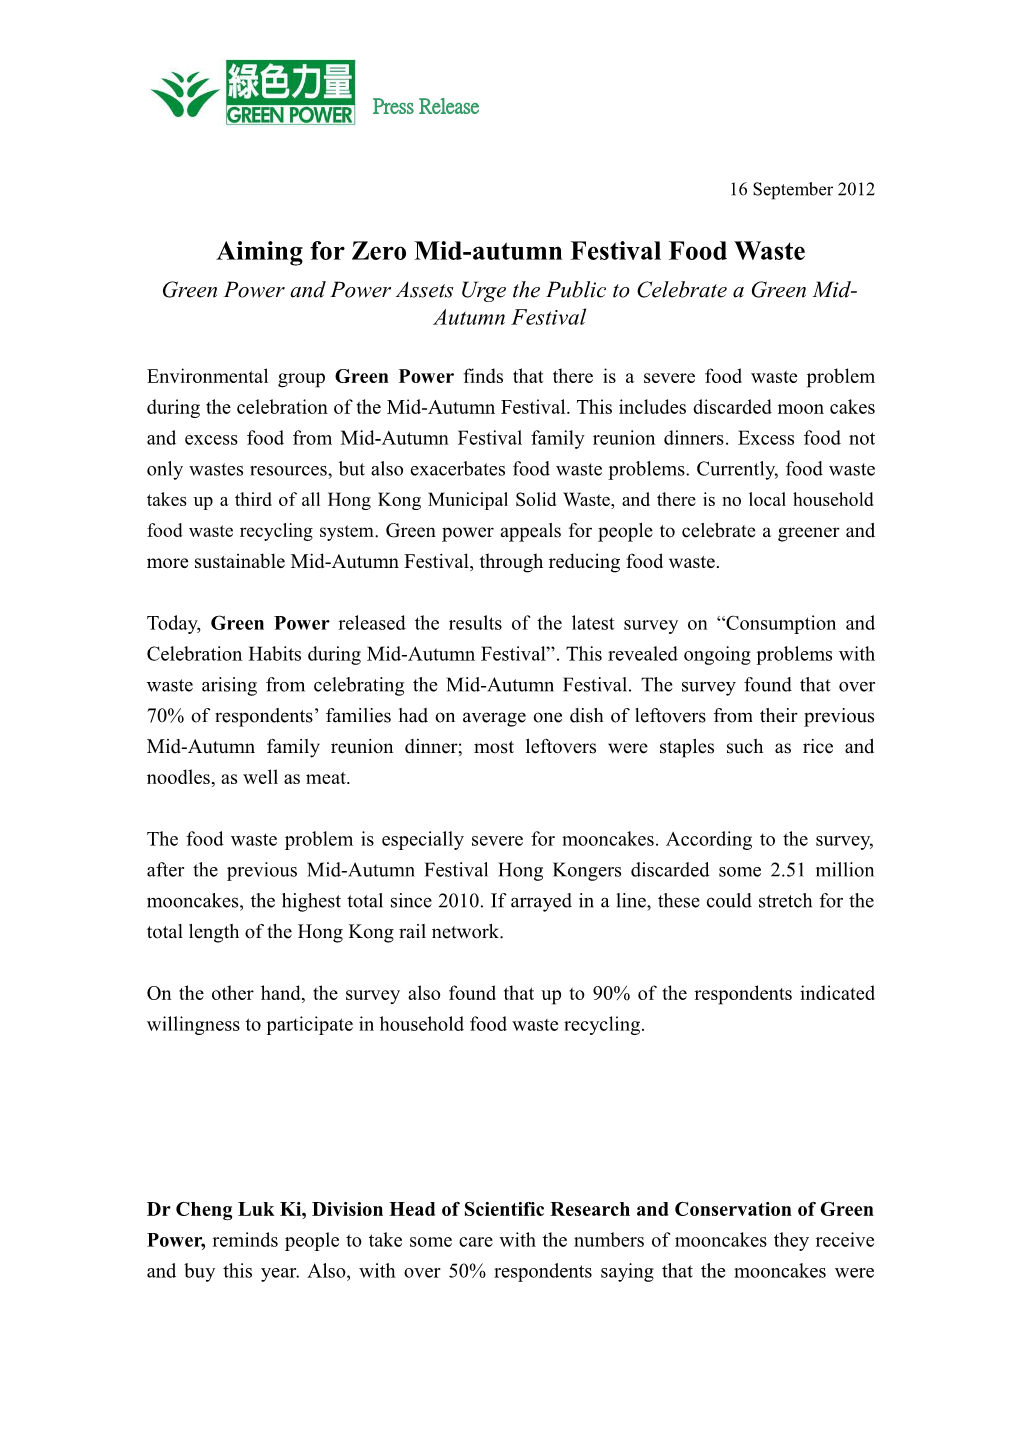 Aiming for Zero Mid-Autumn Festival Food Waste